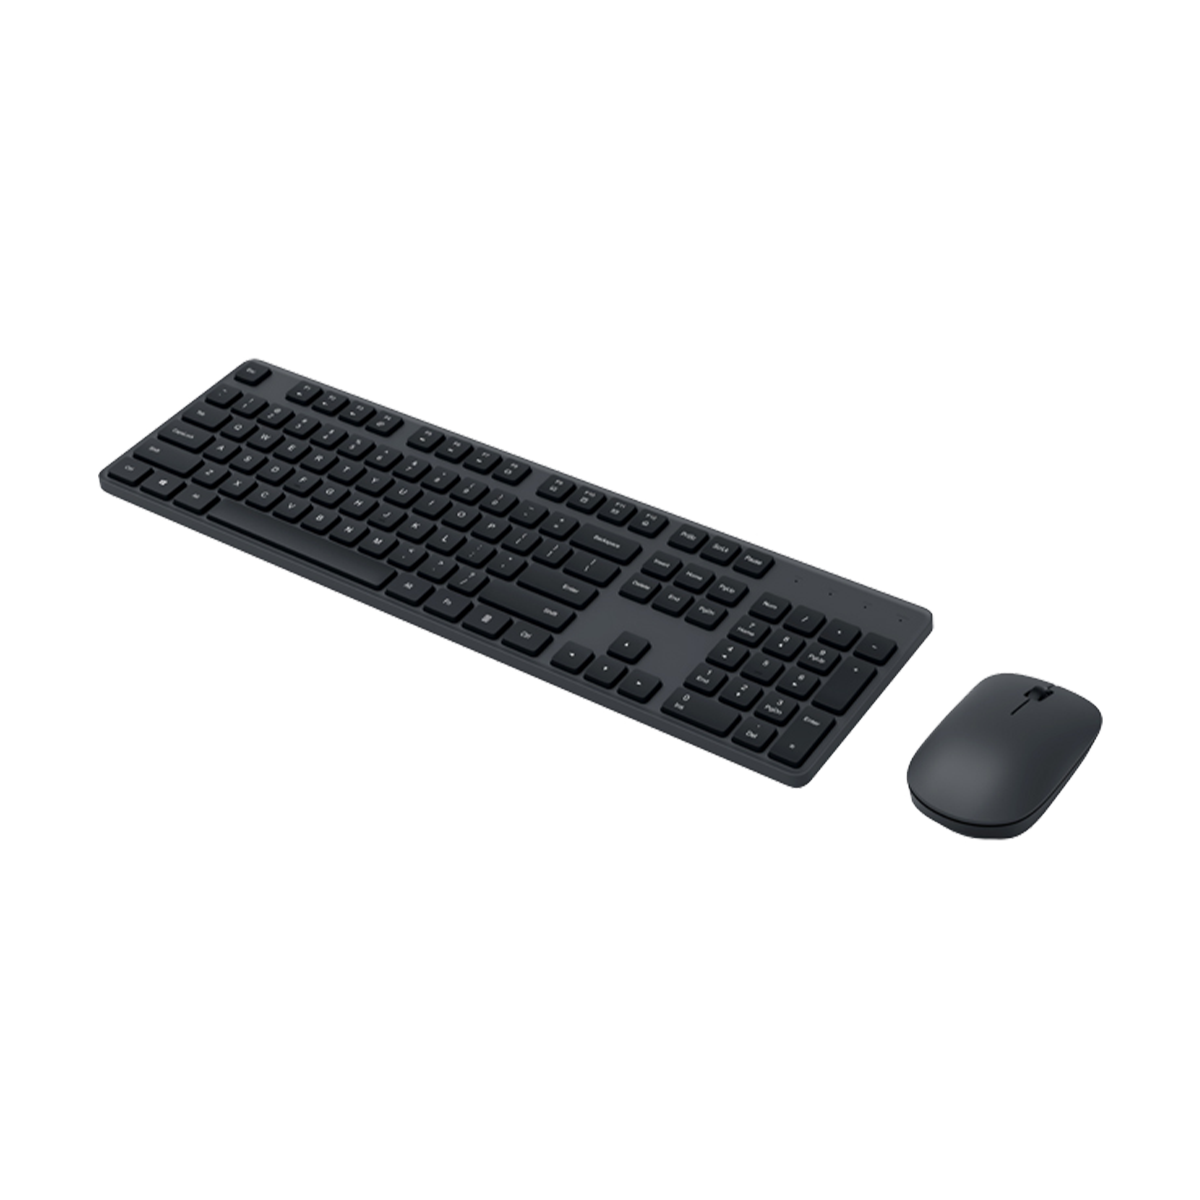 Xiaomi Wireless Keyboard and Mouse Combo (English)